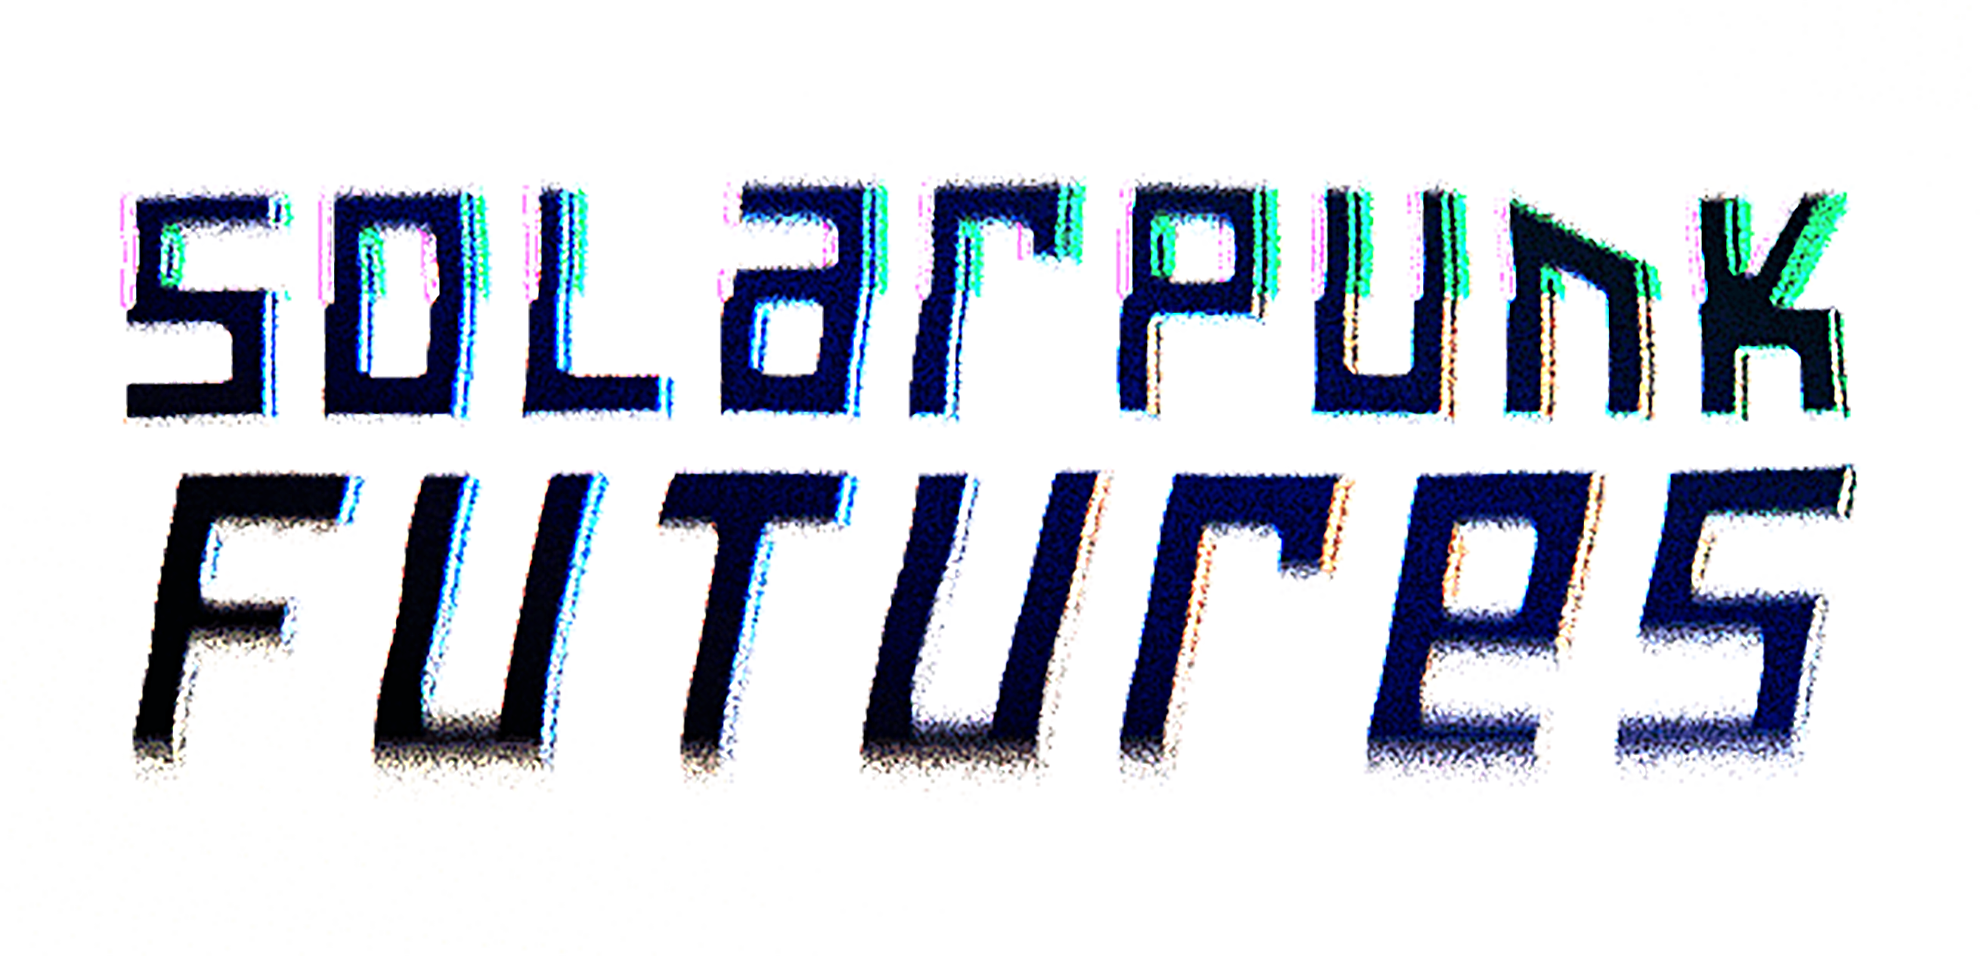 Solarpunk Futures: A Fun and Creative Utopian Storytelling Game – Solarpunk  Magazine